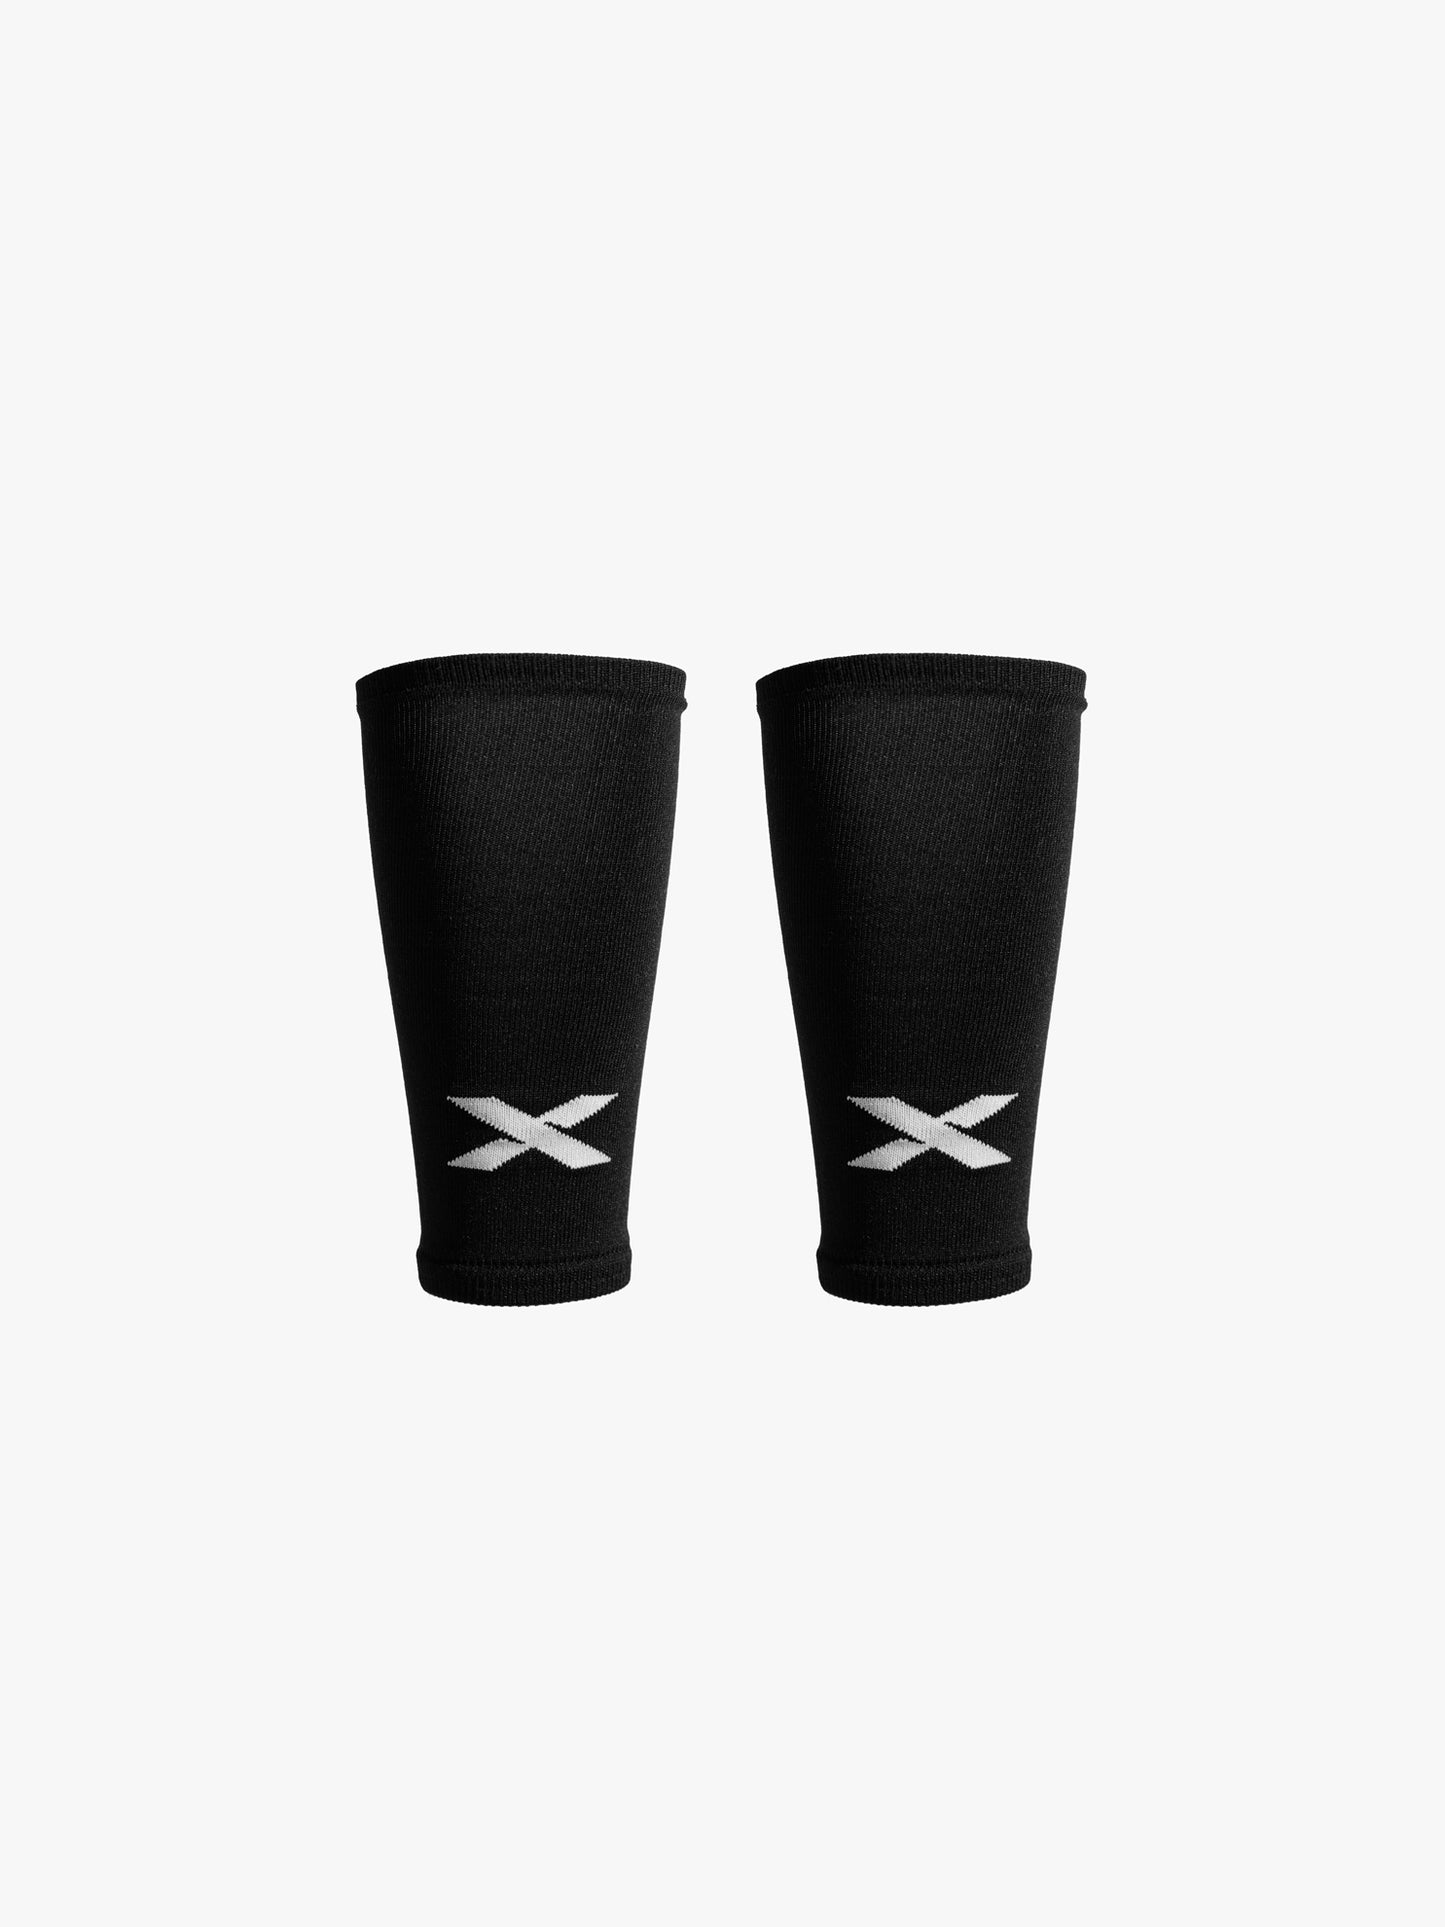 Nexus Sleeve Short - Black